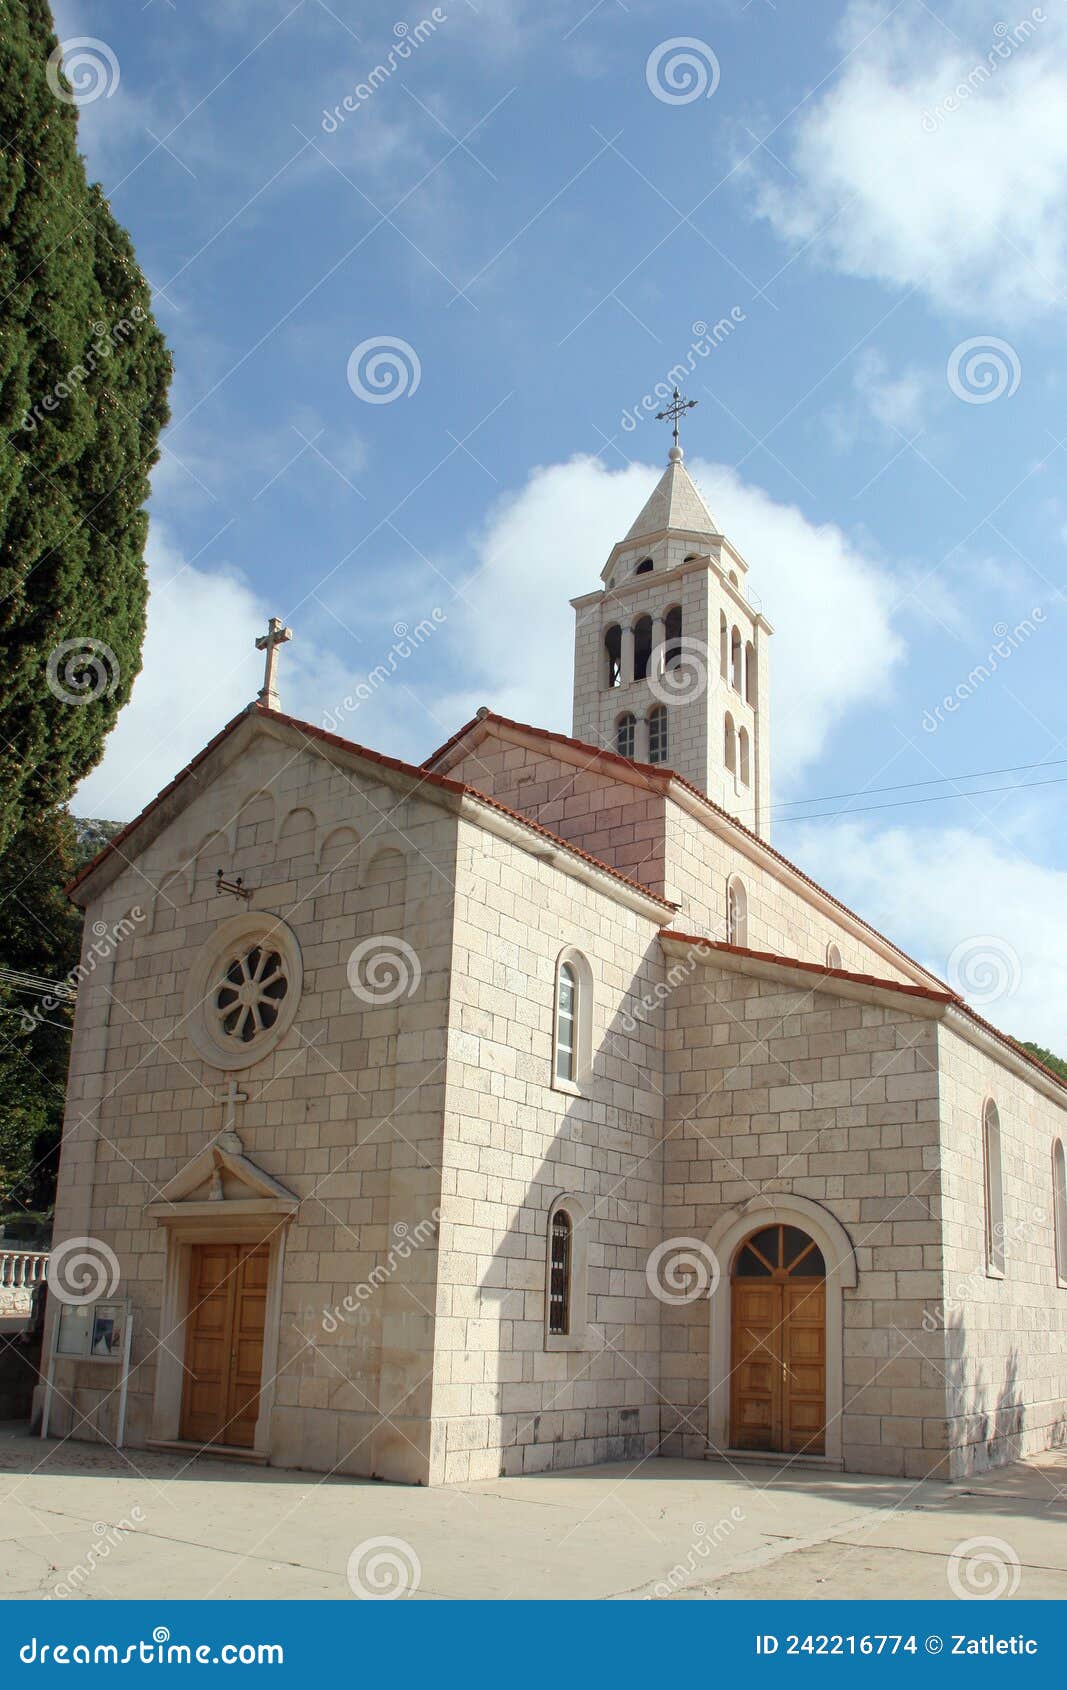 church of st. peter in cara, croatia